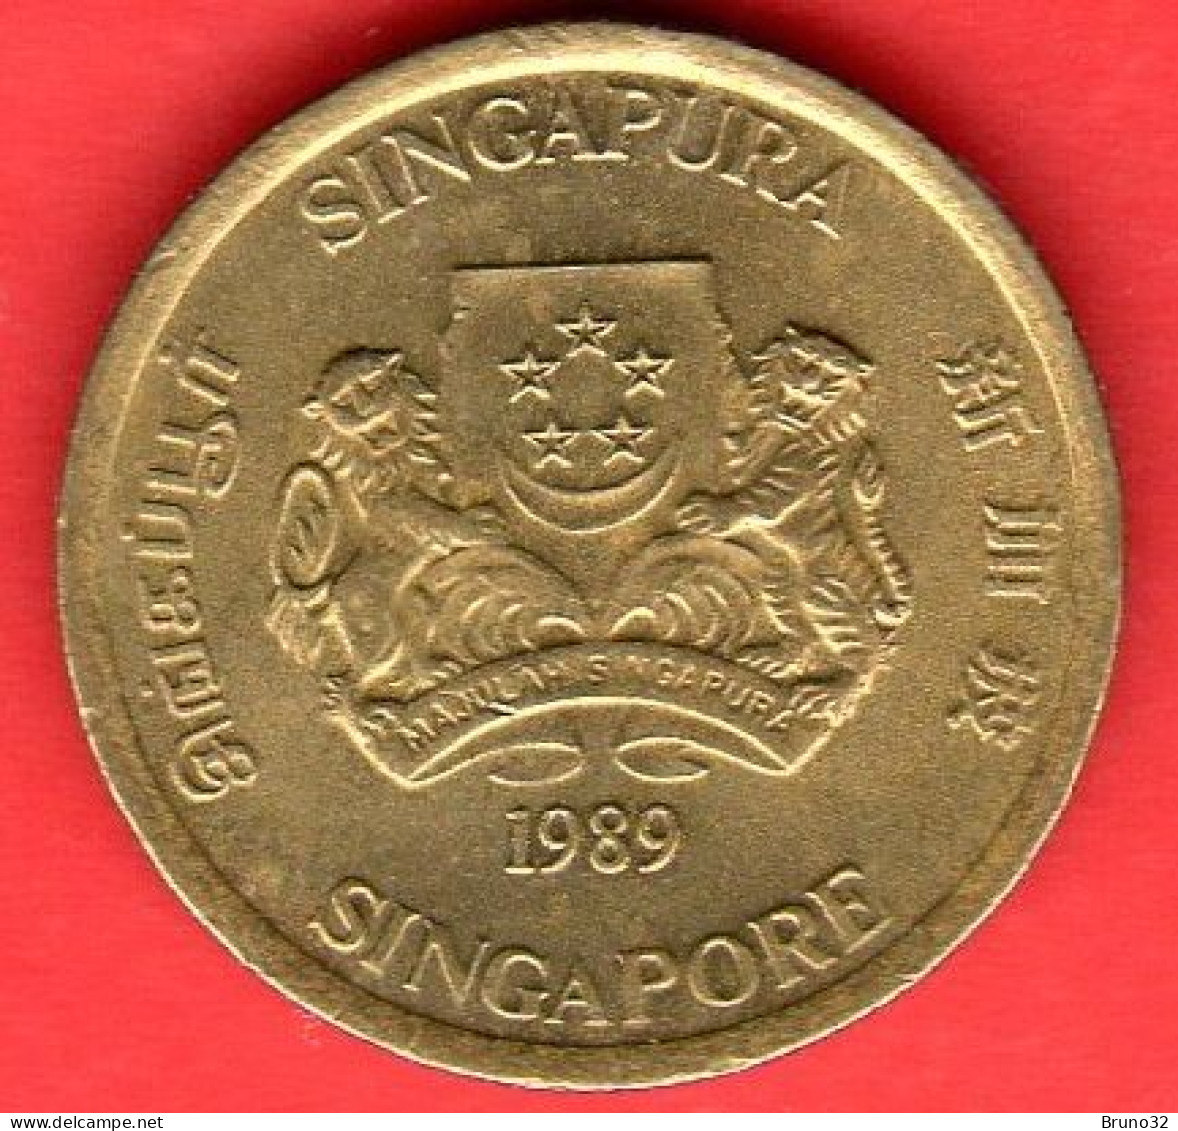 SINGAPORE - Singapura - 1989 - 5 Cents - QFDC/aUNC - Come Da Foto - Singapour